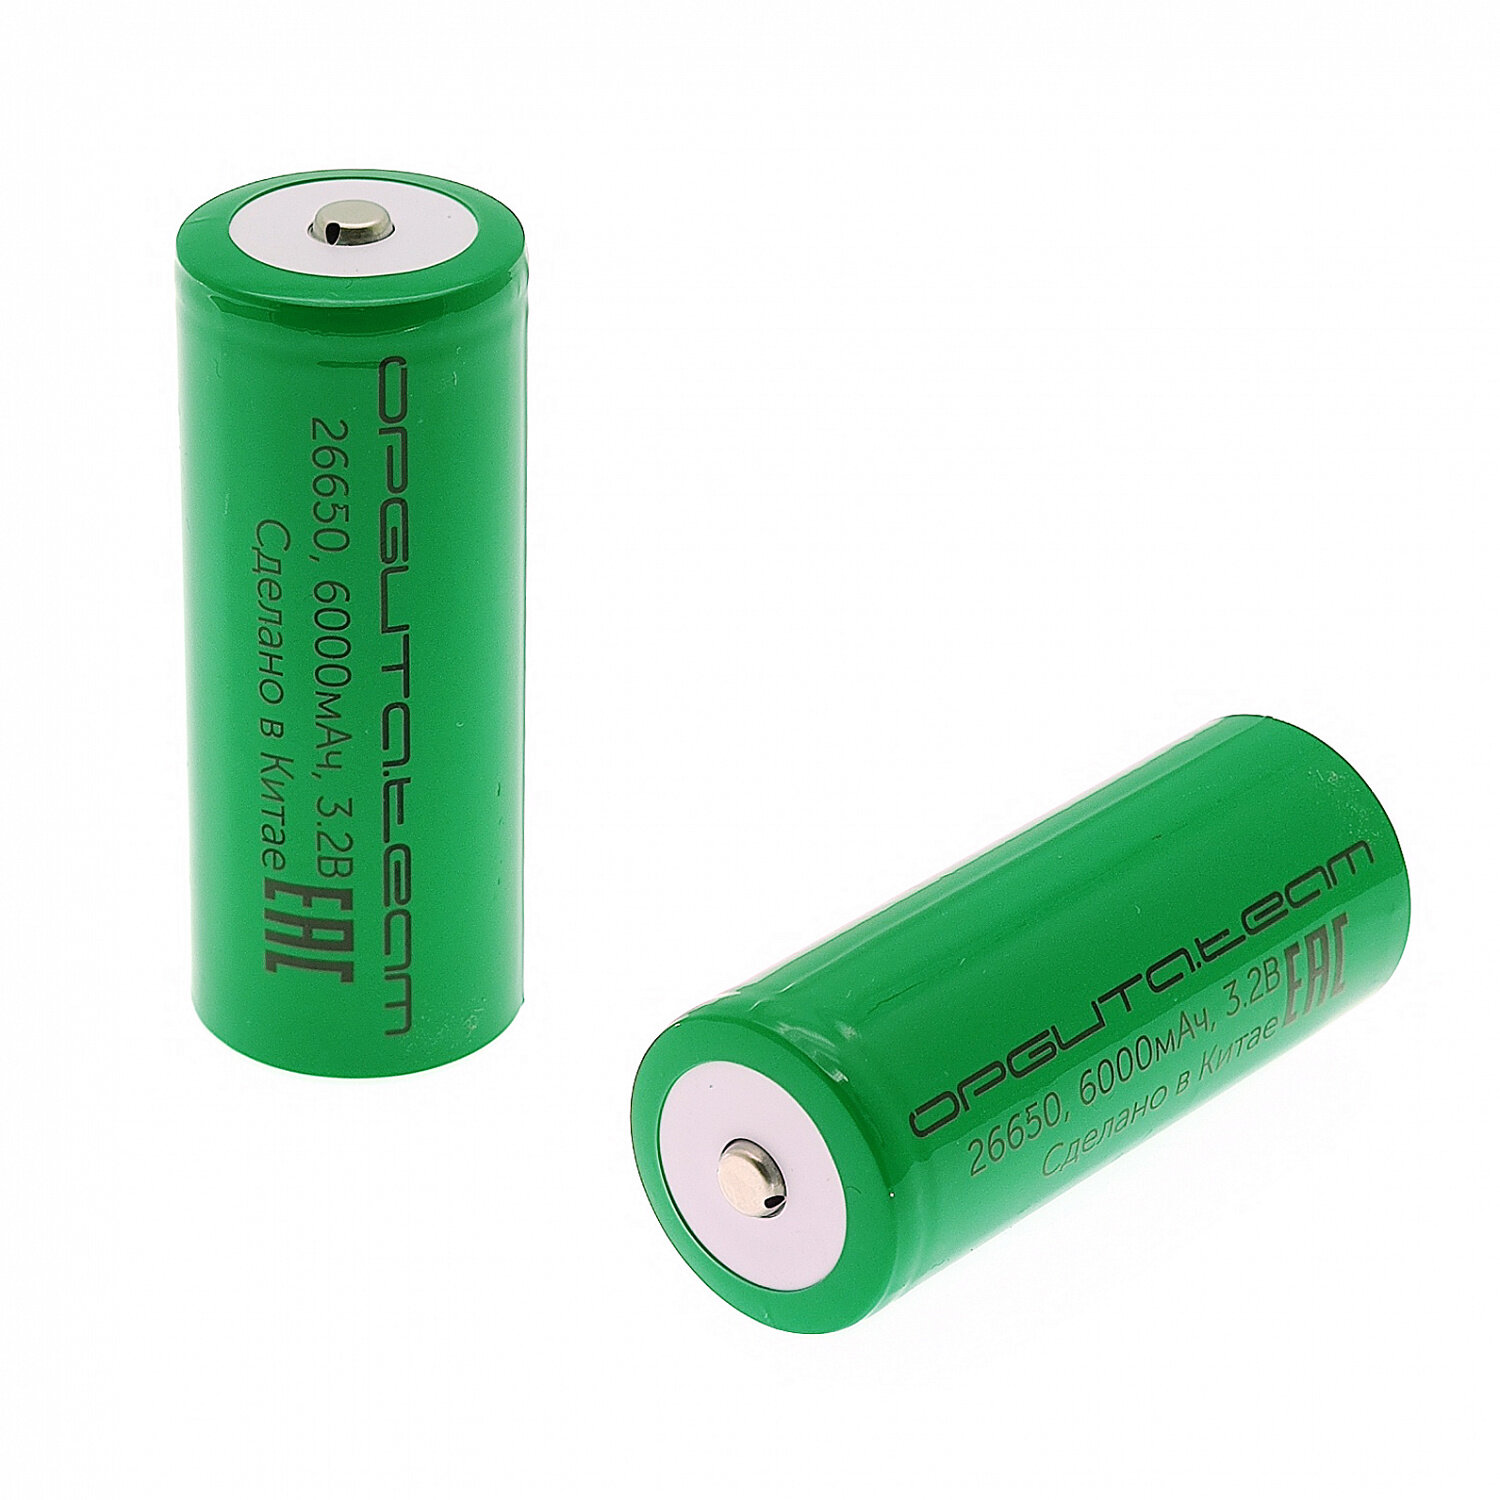 Аккумулятор 26650 (6000mA, 3.2В, с пином) перезаряжаемая батарейка 1шт